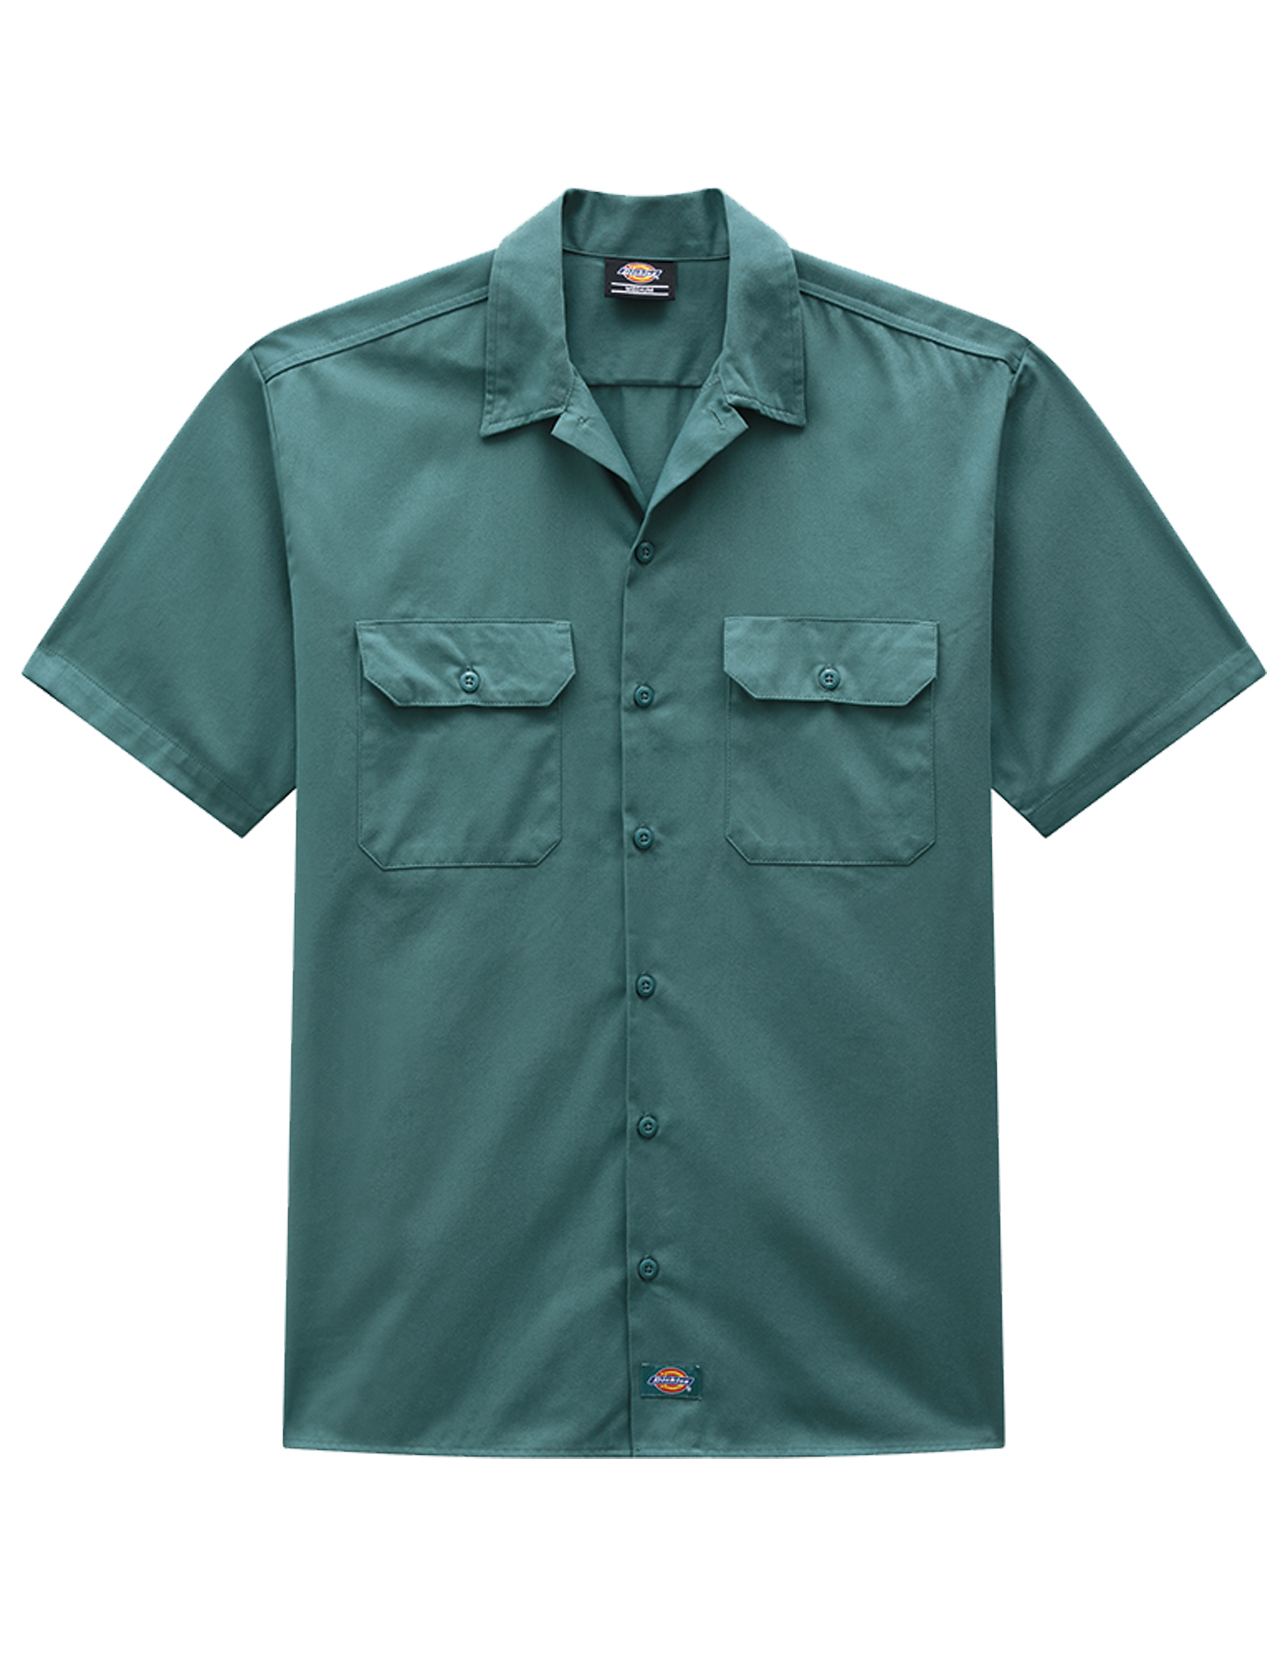 Dickies - Short Sleeve Work Shirt - Lincoln Green